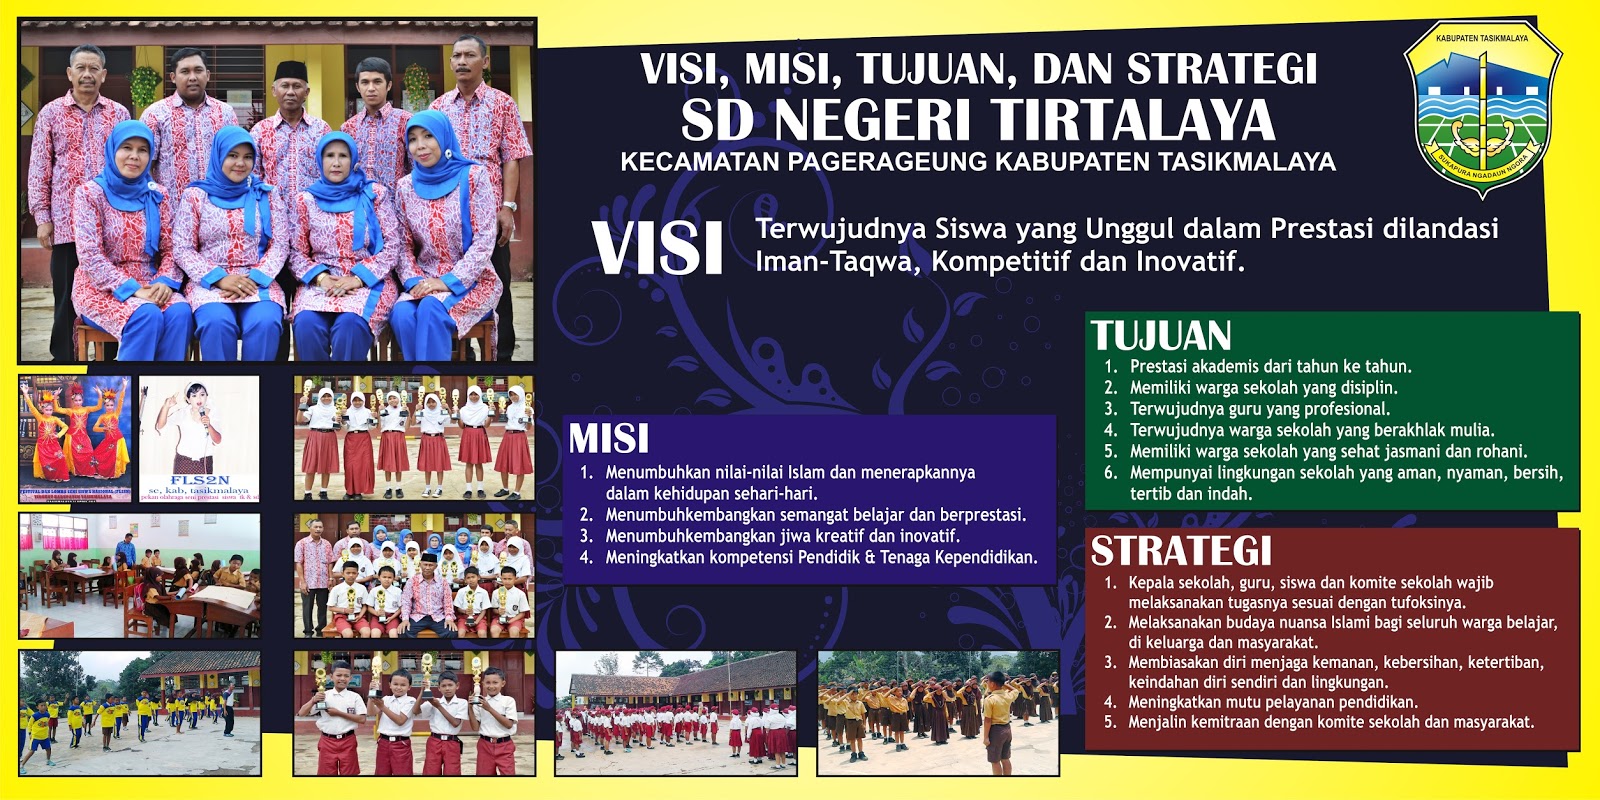 Download Contoh Banner Visi Misi Sekolah Dasar cdr KARYAKU